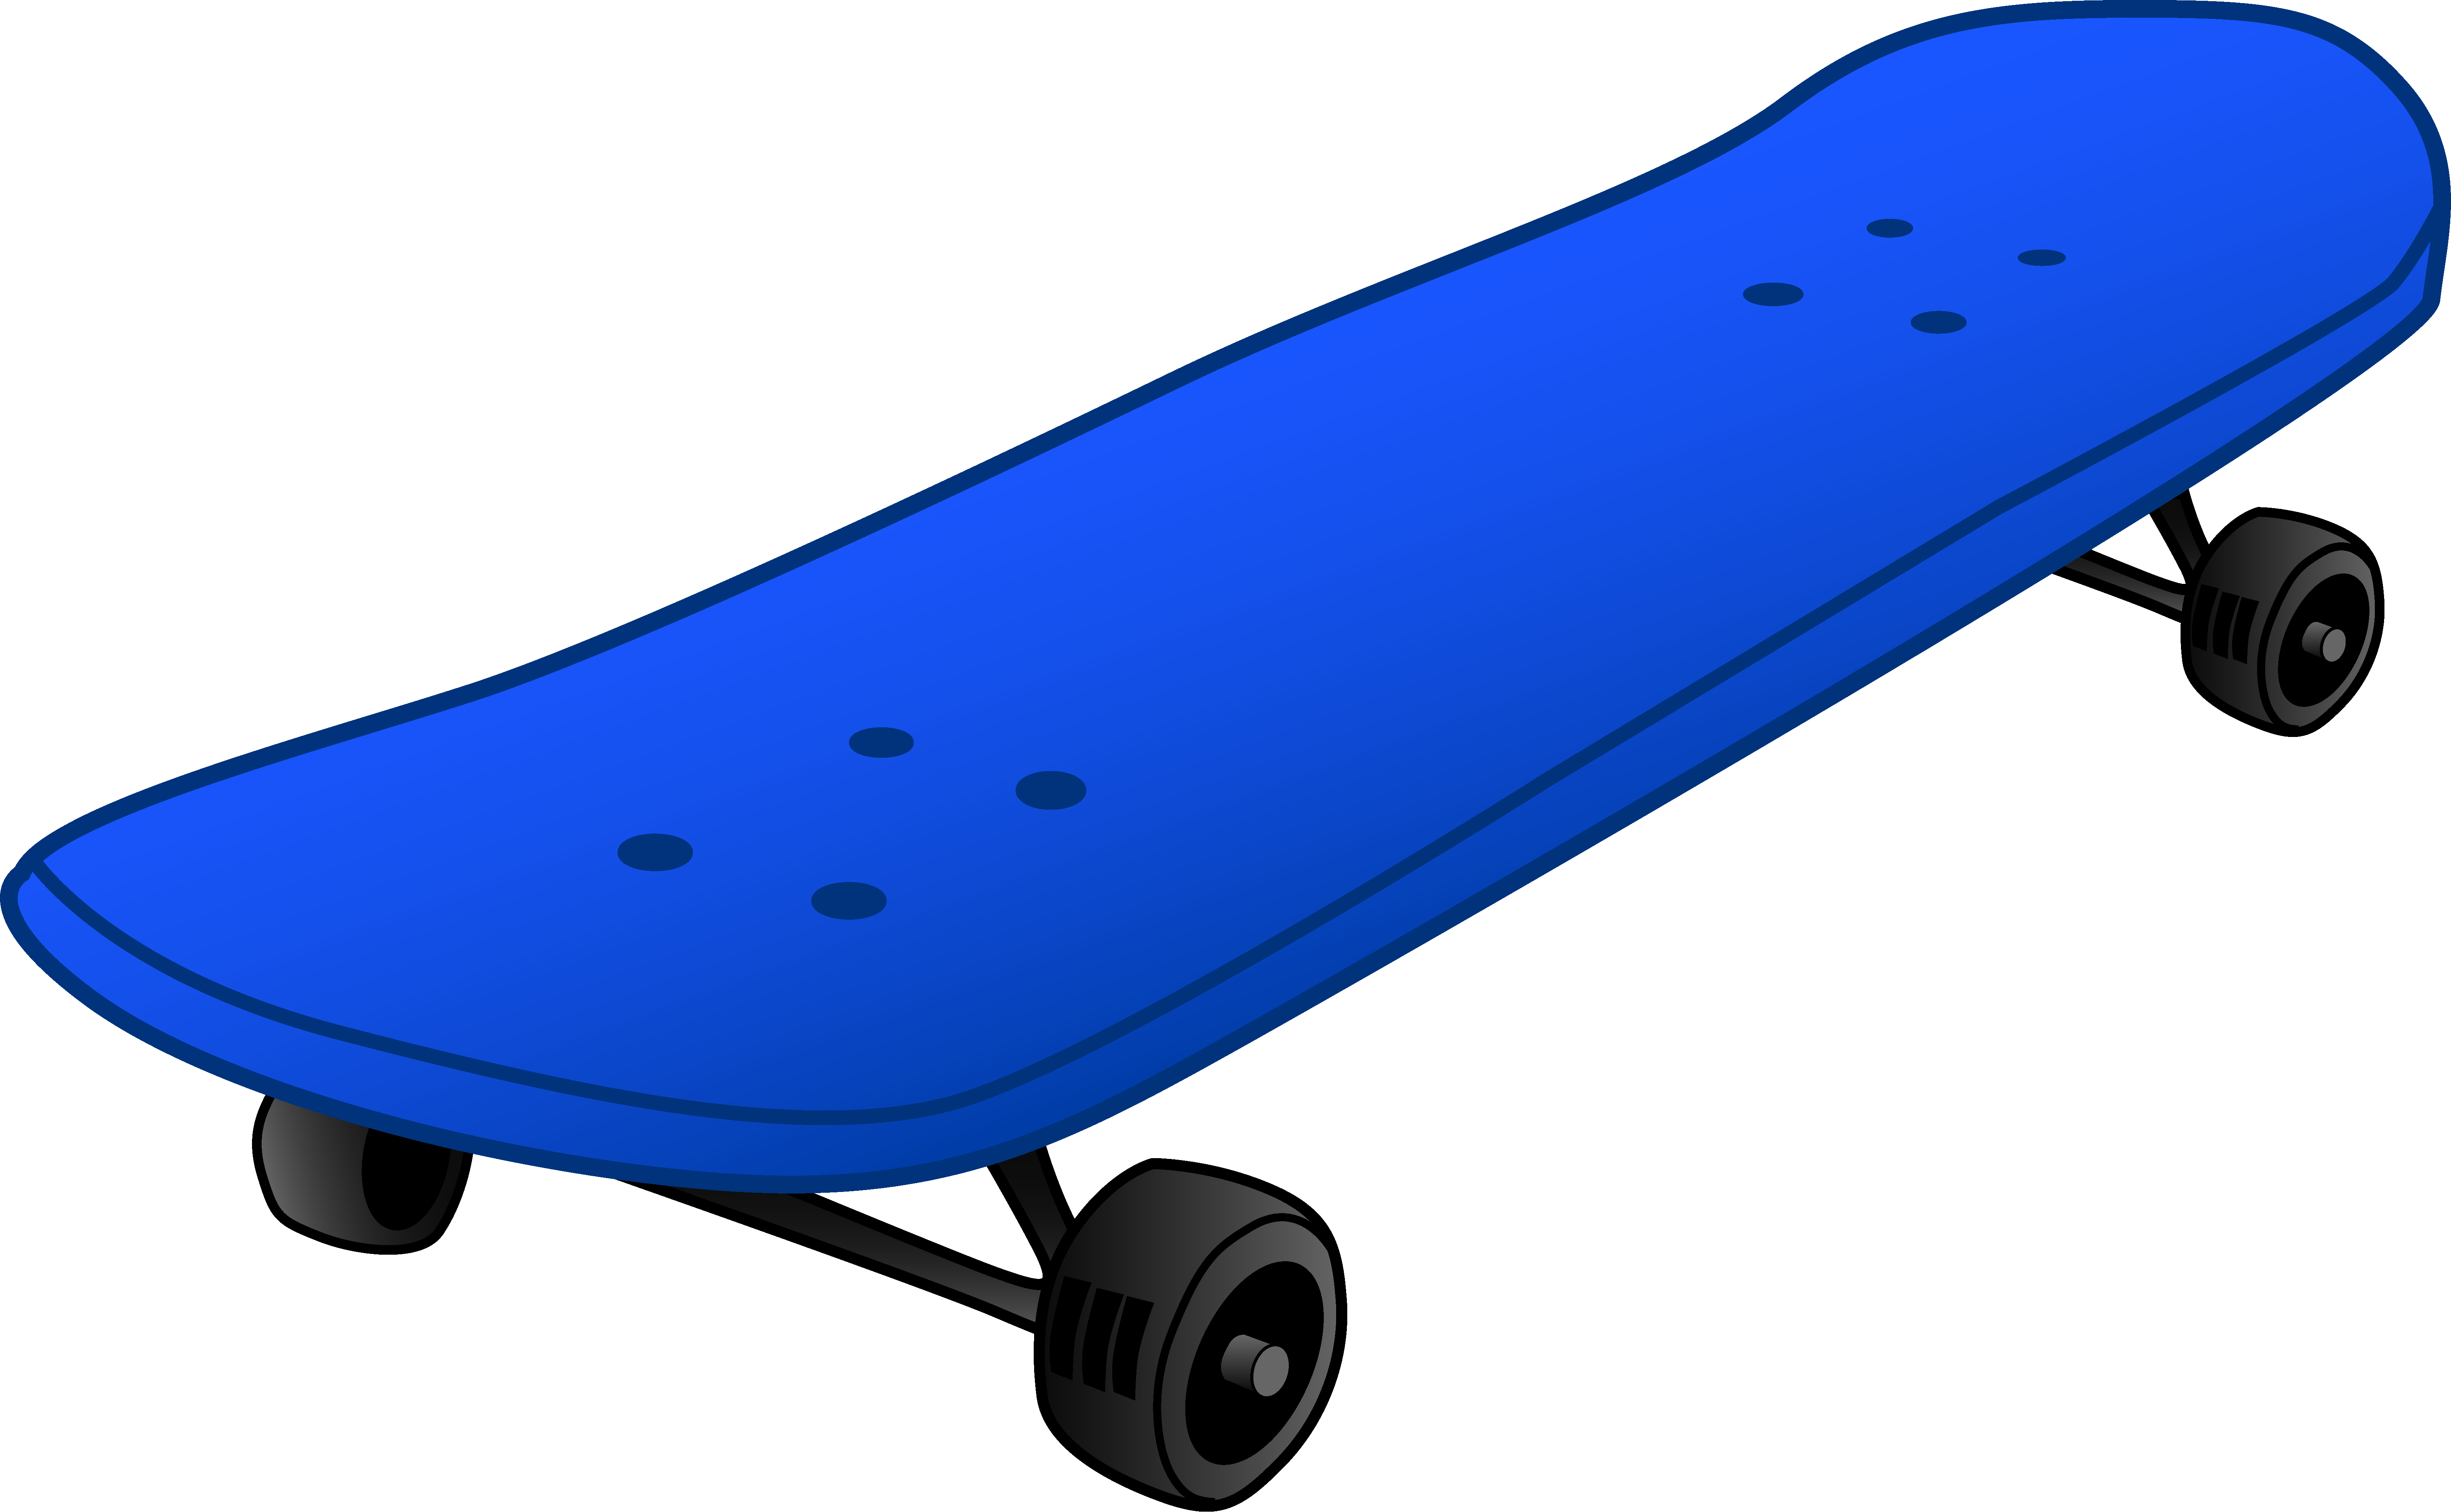 Skateboard clipart #11, Download drawings